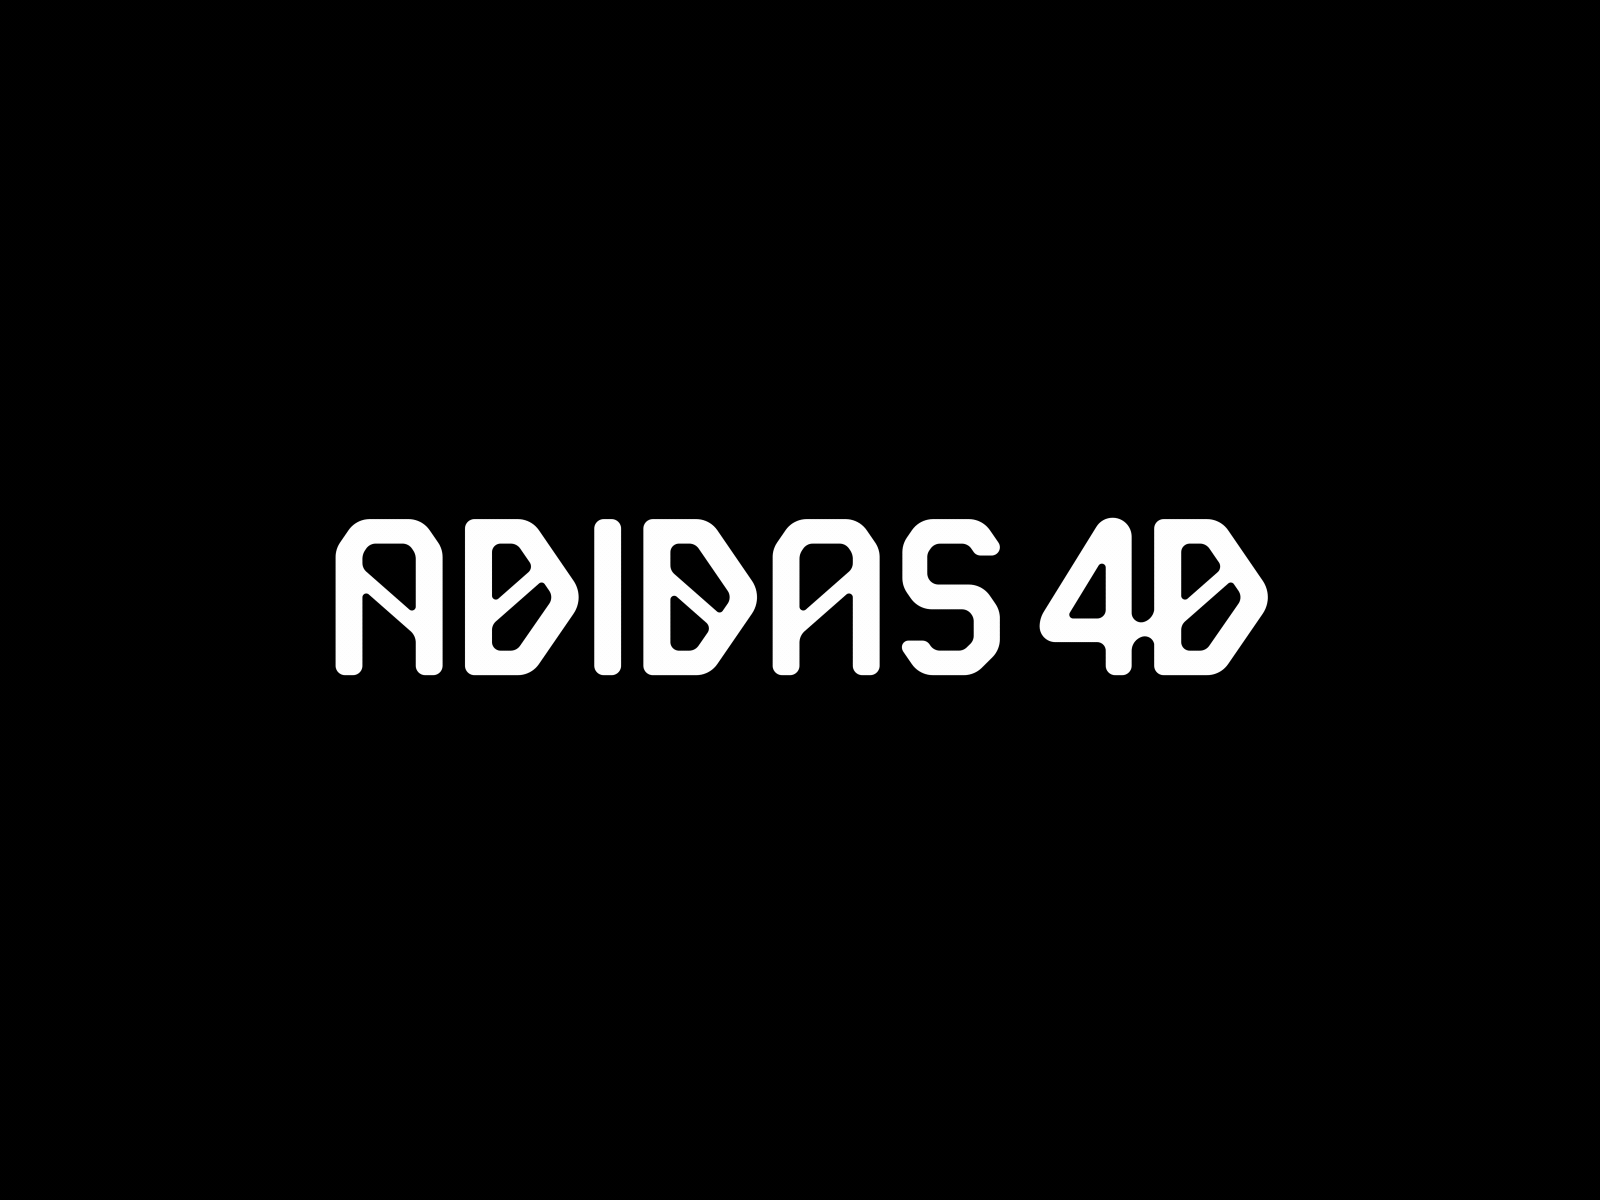 Gallina Universidad gatito Adidas 4D - logo animation by Jeroen Krielaars on Dribbble